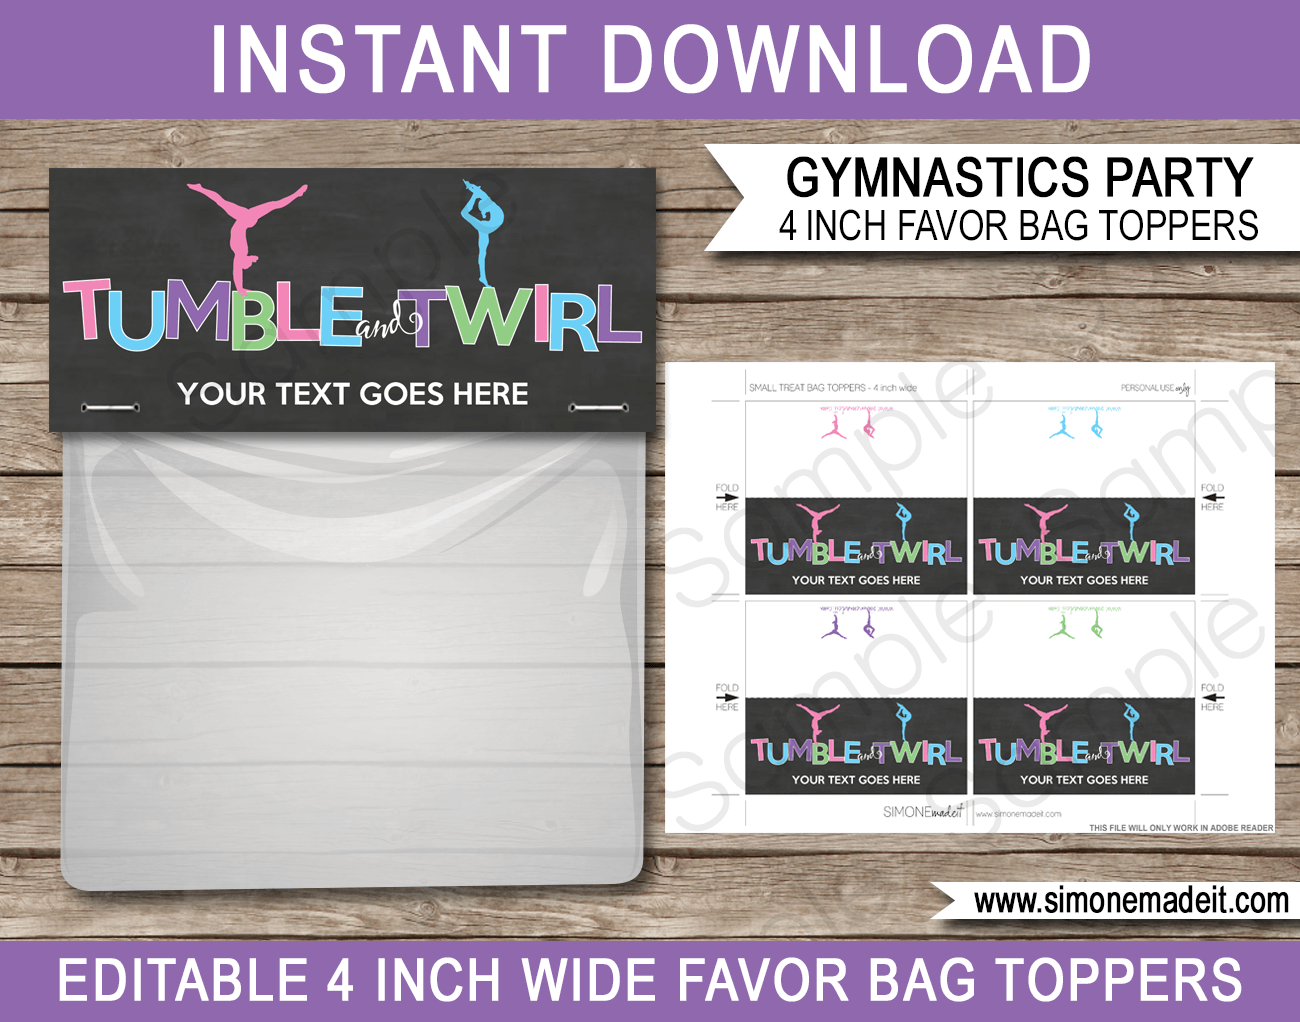 Editable Gymnastics Party Favor Bag Toppers | Birthday Party | Printable DIY Template | $3.00 Instant Download via SIMONEmadeit.com